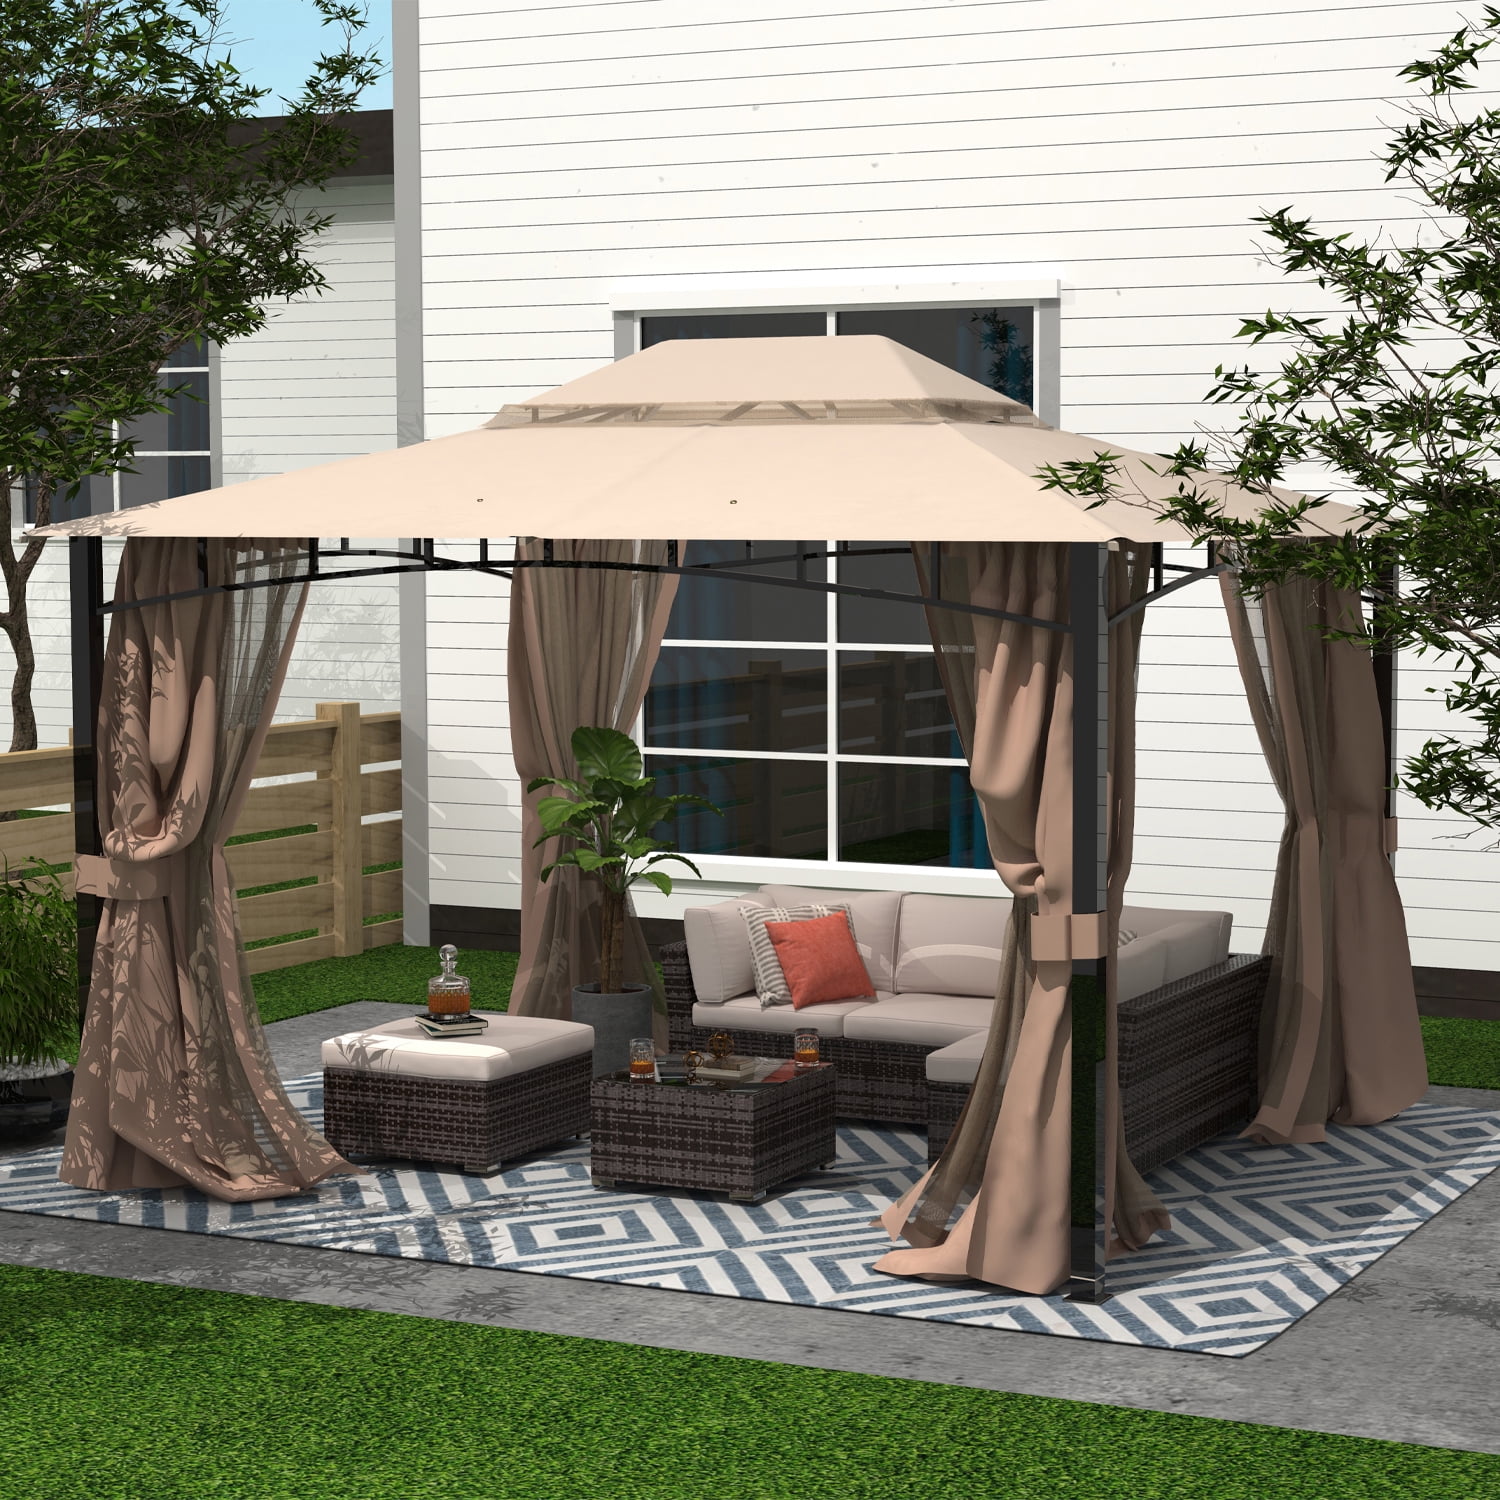 Abccanopy 10x12 Patio Gazebos For Patios Double Roof Soft Canopy Garden Gazebo With Mosquito Netting Shade And Rain Khaki Com - Abccanopy 10 X 12 Patio Gazebo Canopy